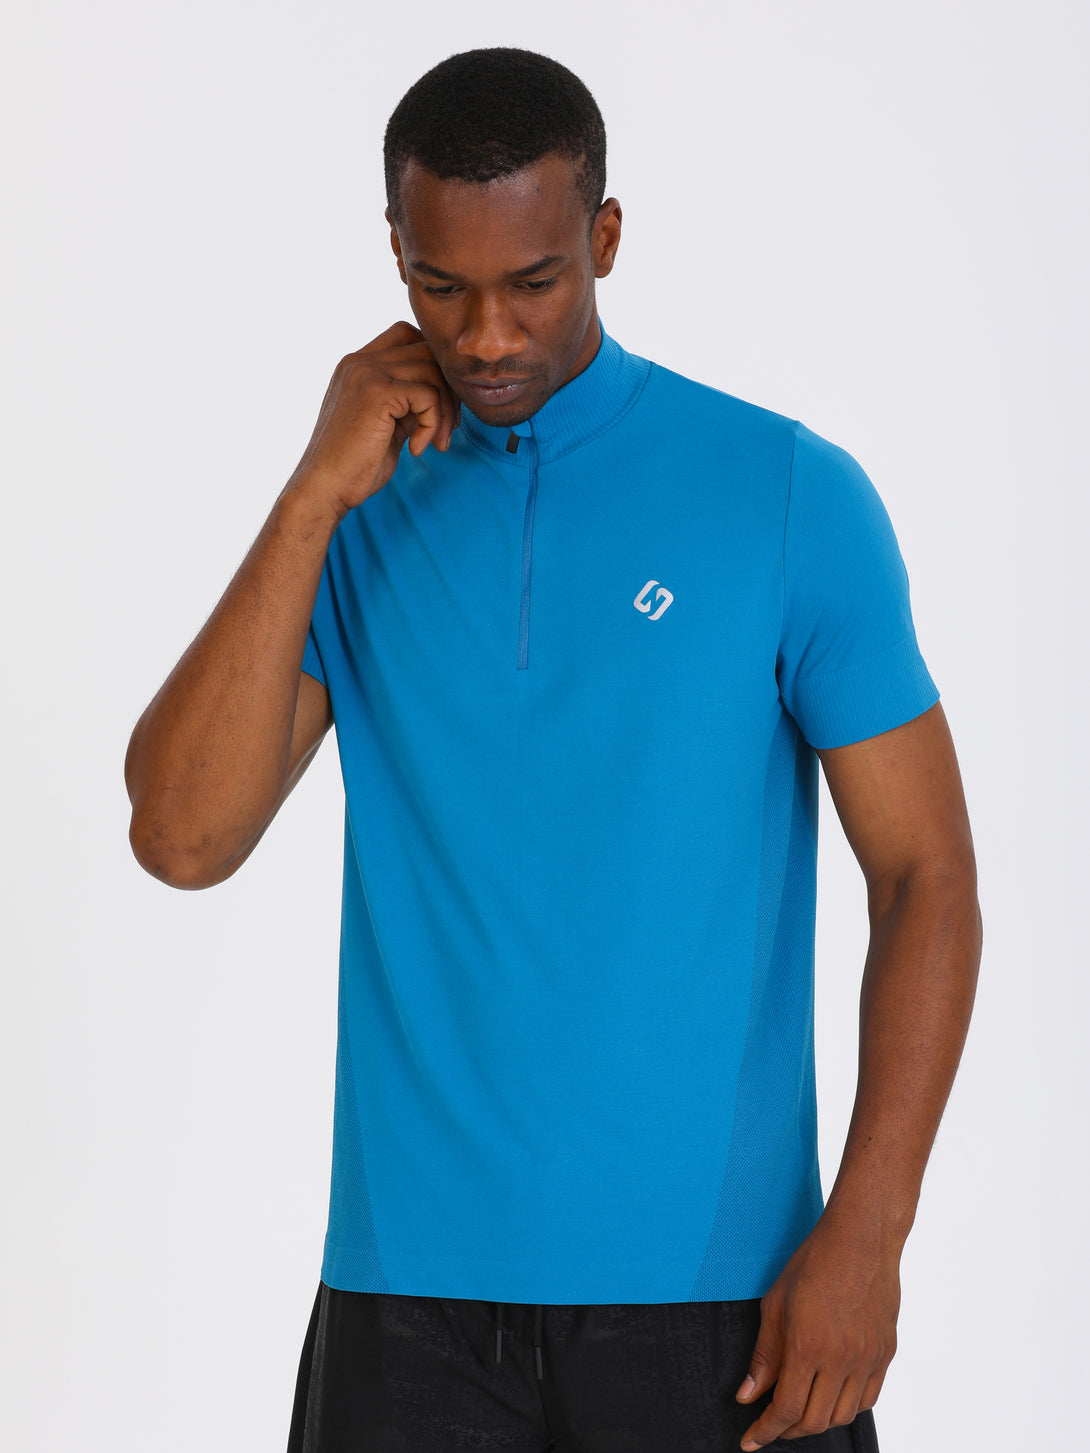 A Man Wearing Saxony Blue Color Seamless Short Sleeve Zipped T-Shirt